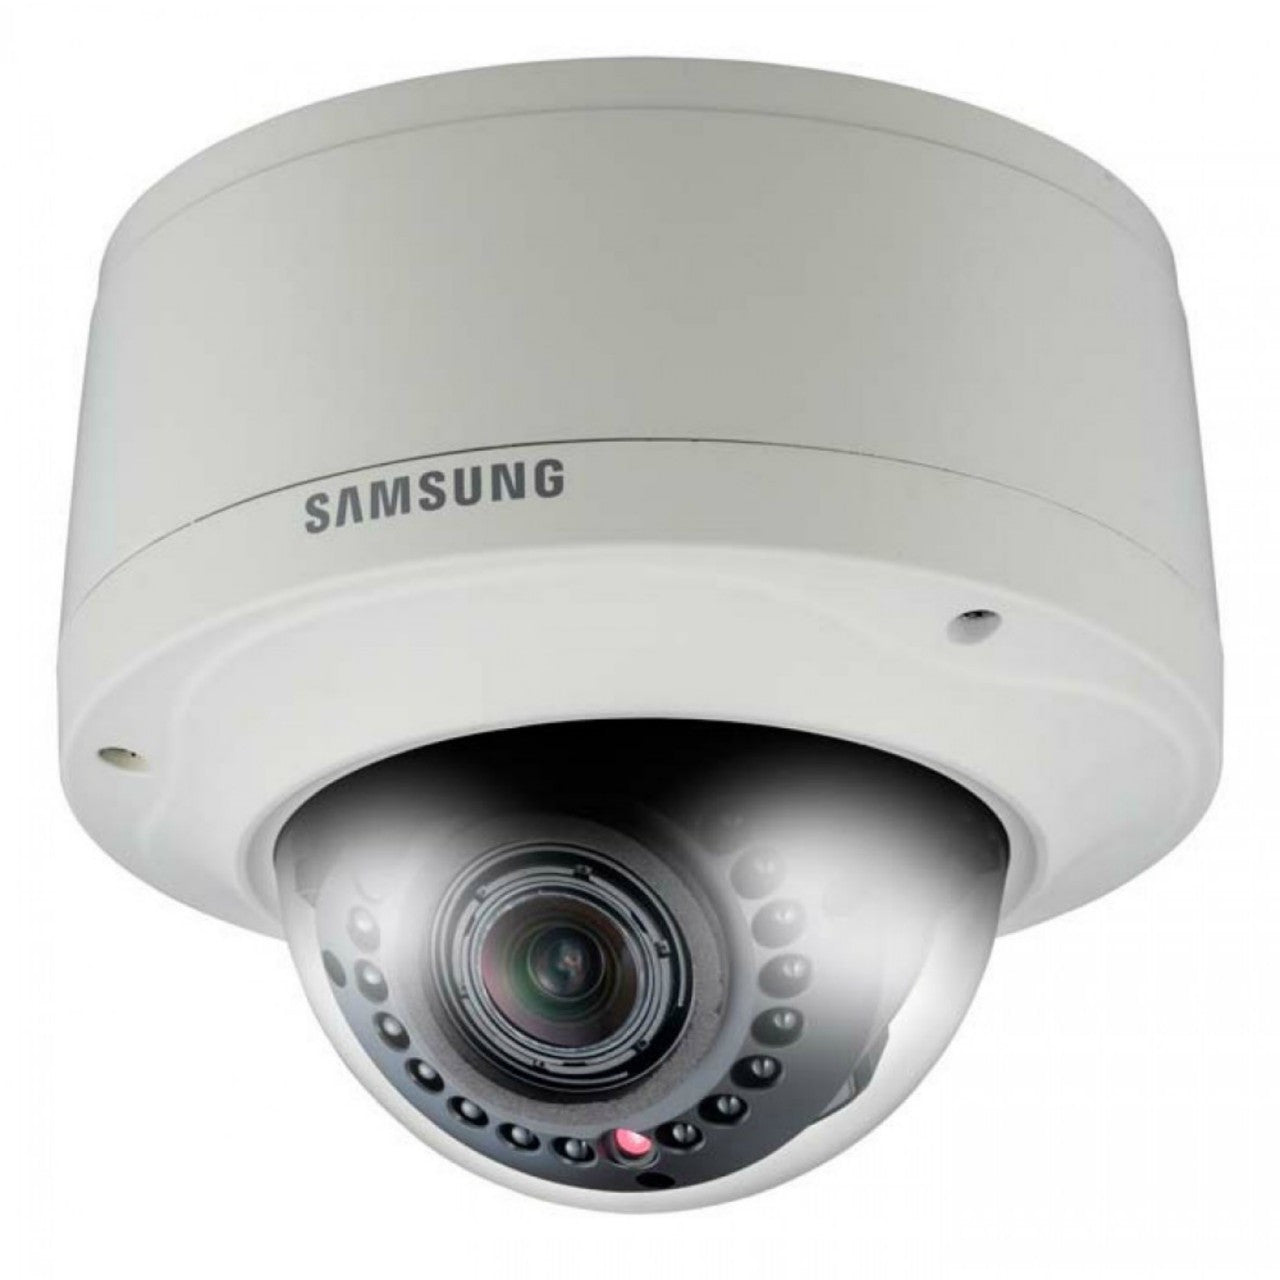 Samsung SNV-7080R 3 Megapixel Full HD Network Vandal-Resistant IR Dome Camera